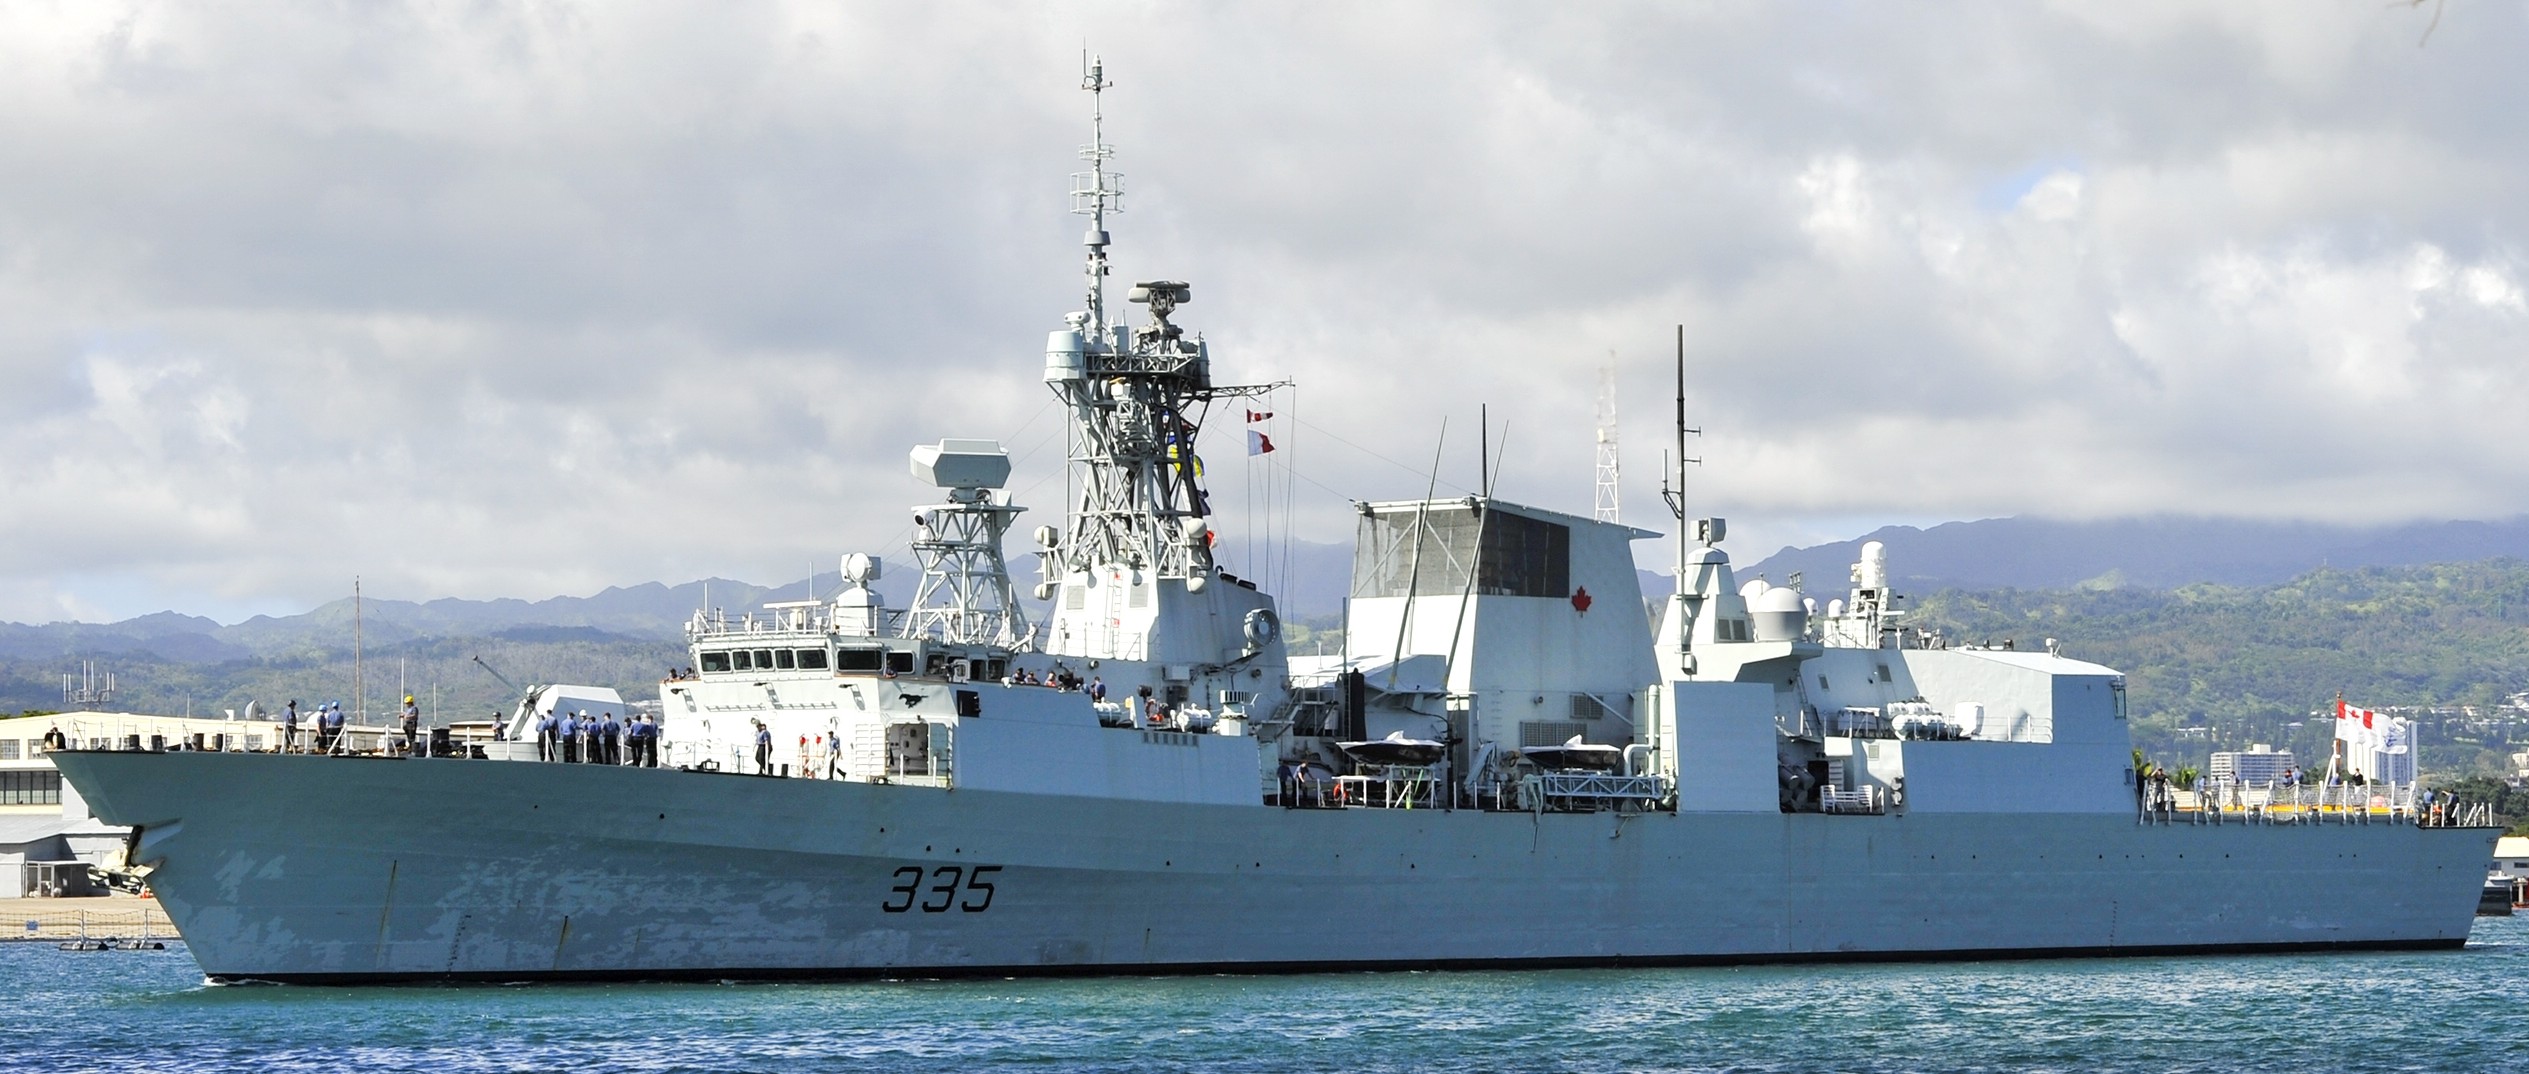 ffh-335 hmcs calgary halifax class helicopter patrol frigate ncsm royal canadian navy 11